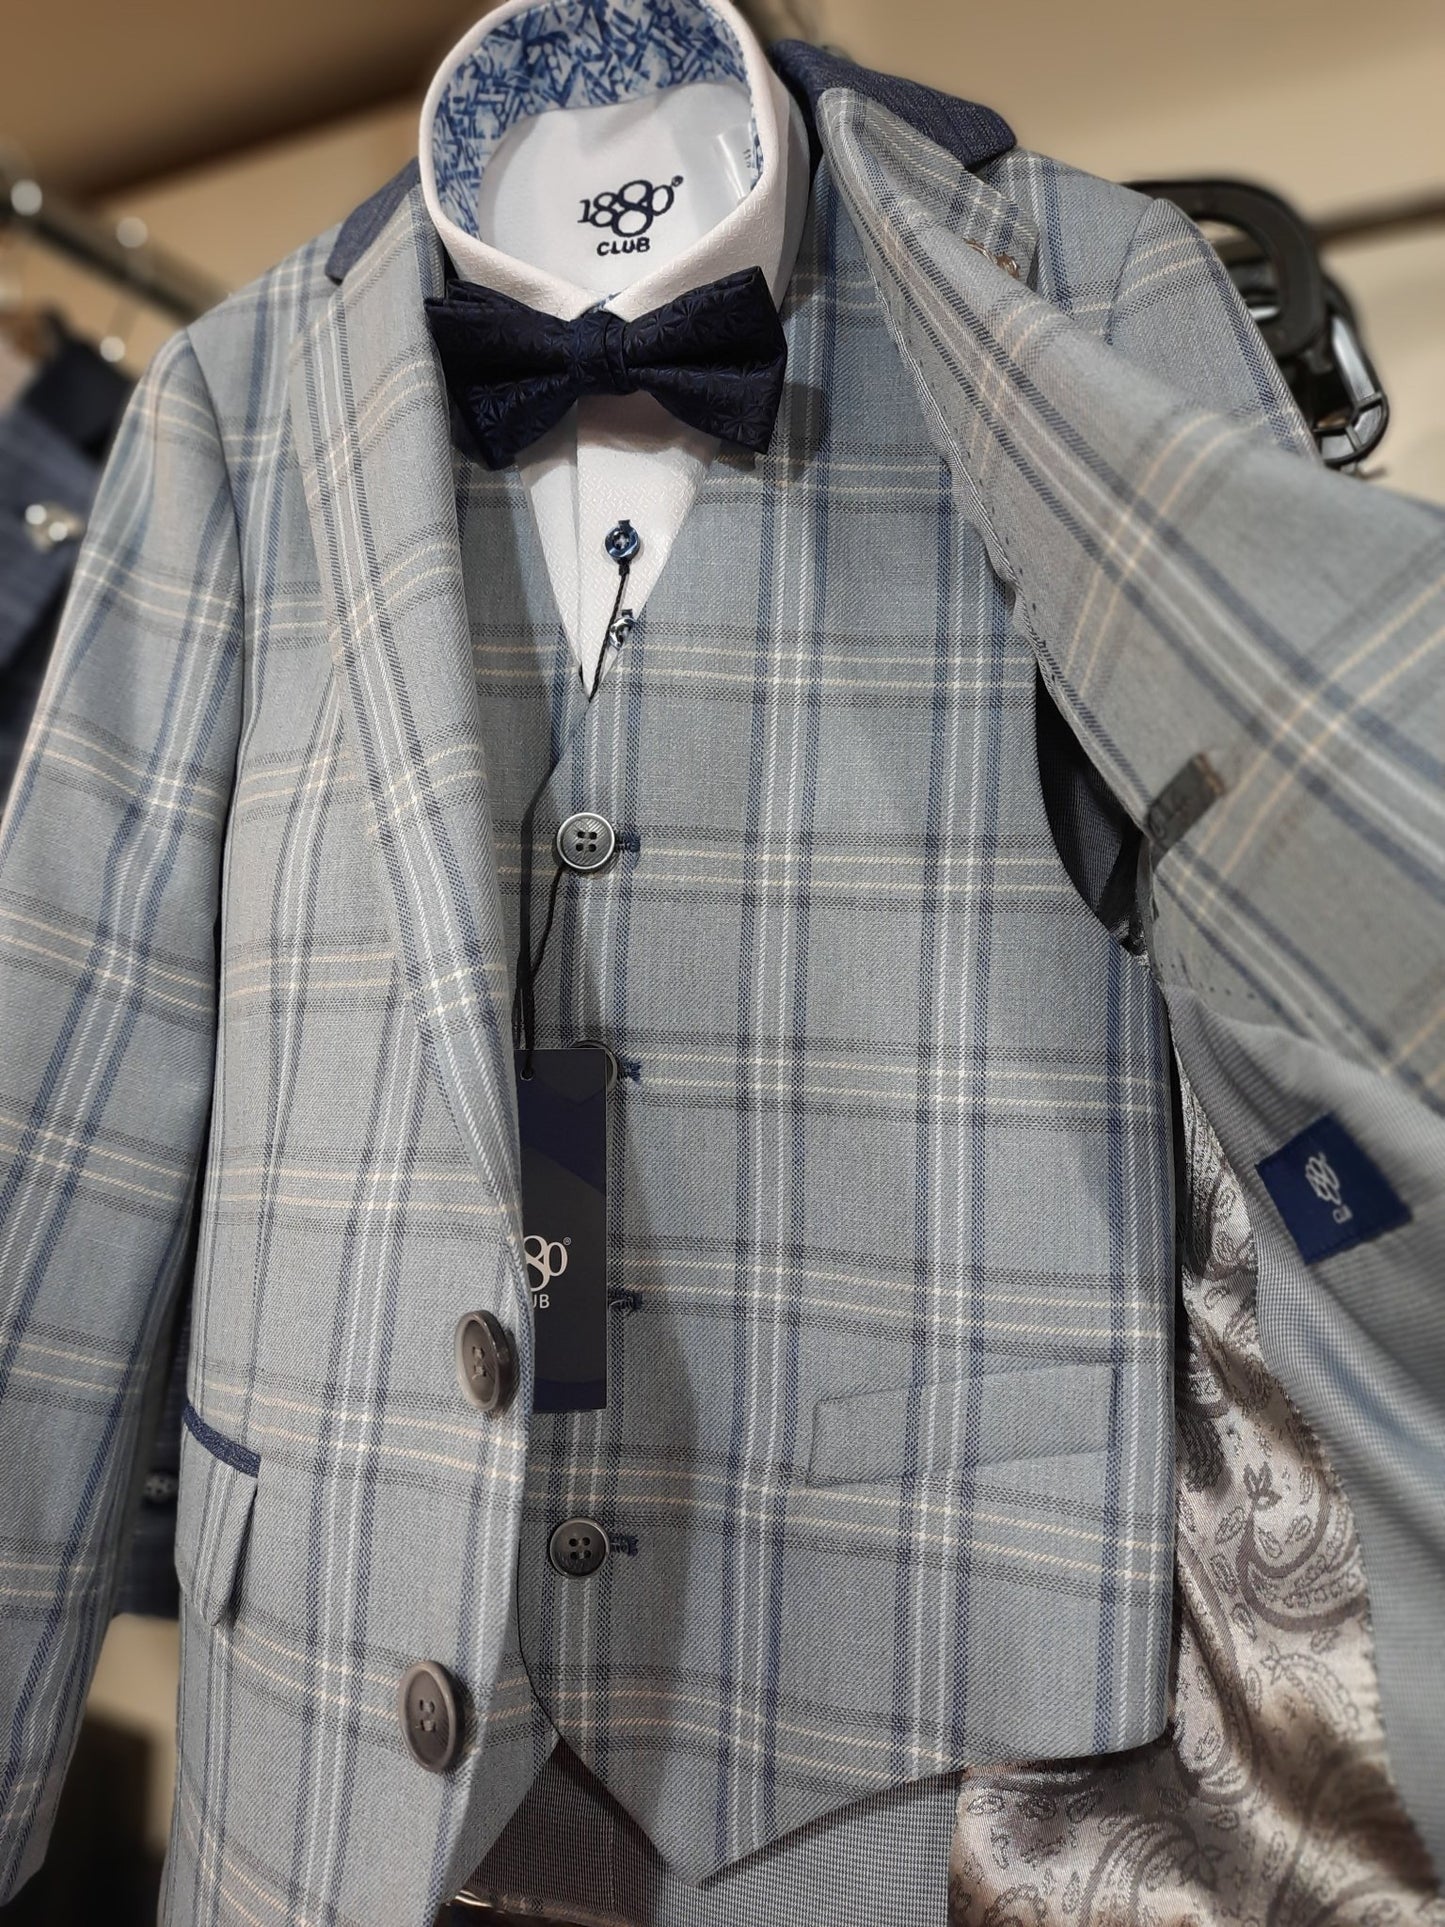 1880 Club Boys Jacket 15118 - Matt O'Brien Fashions